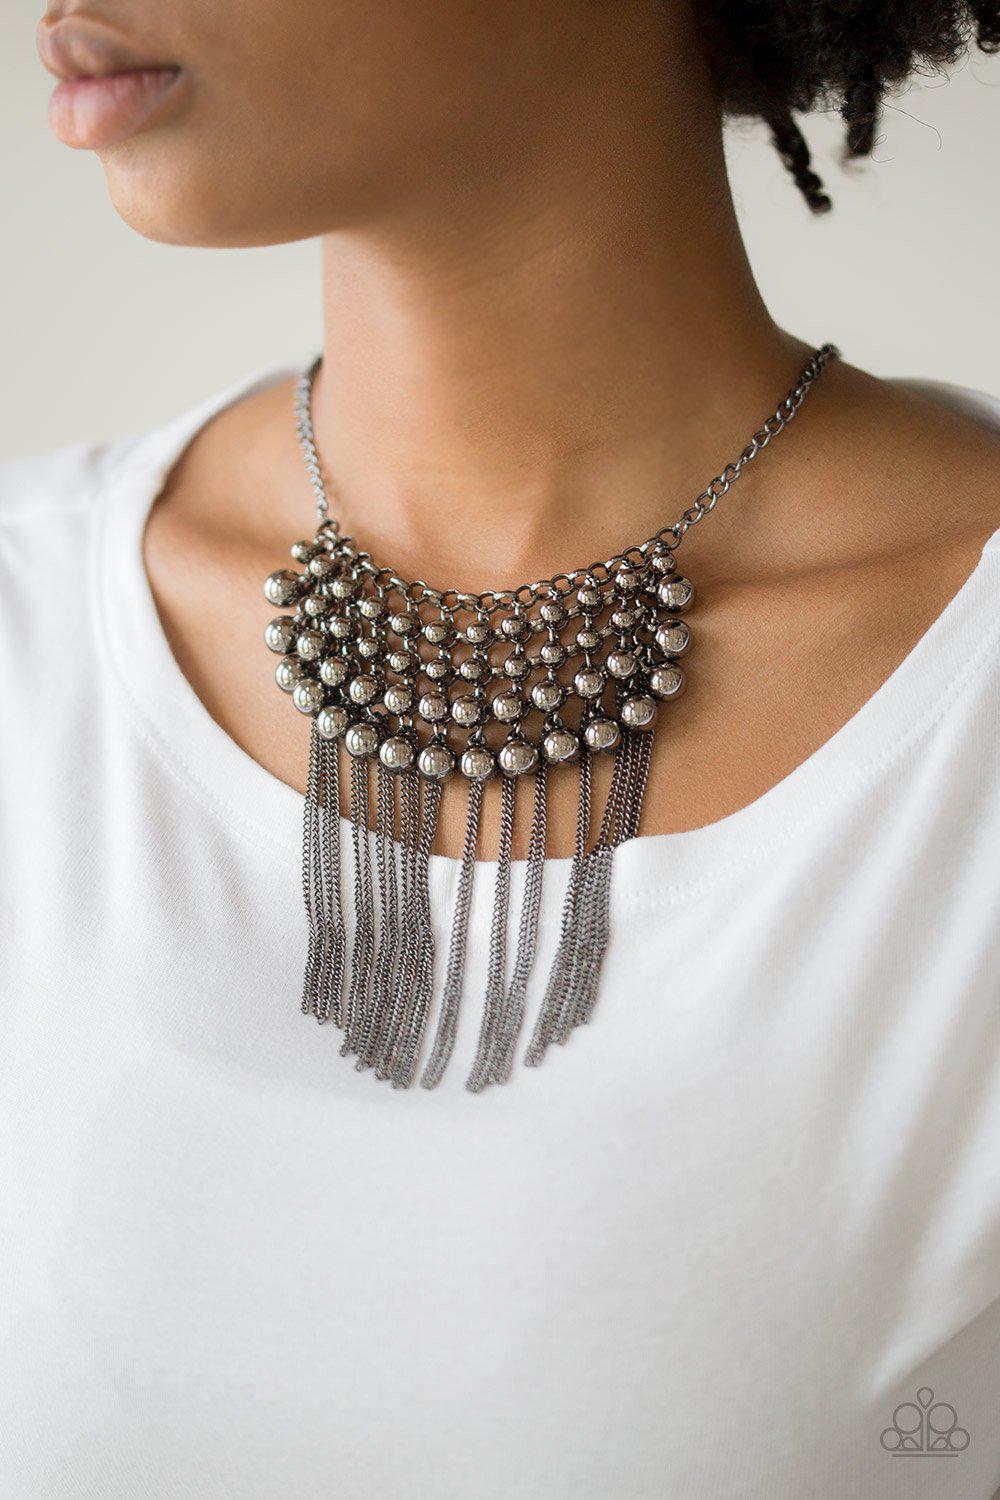 DIVA-de and Rule Gunmetal Black Fringe Necklace - Paparazzi Accessories - model -CarasShop.com - $5 Jewelry by Cara Jewels